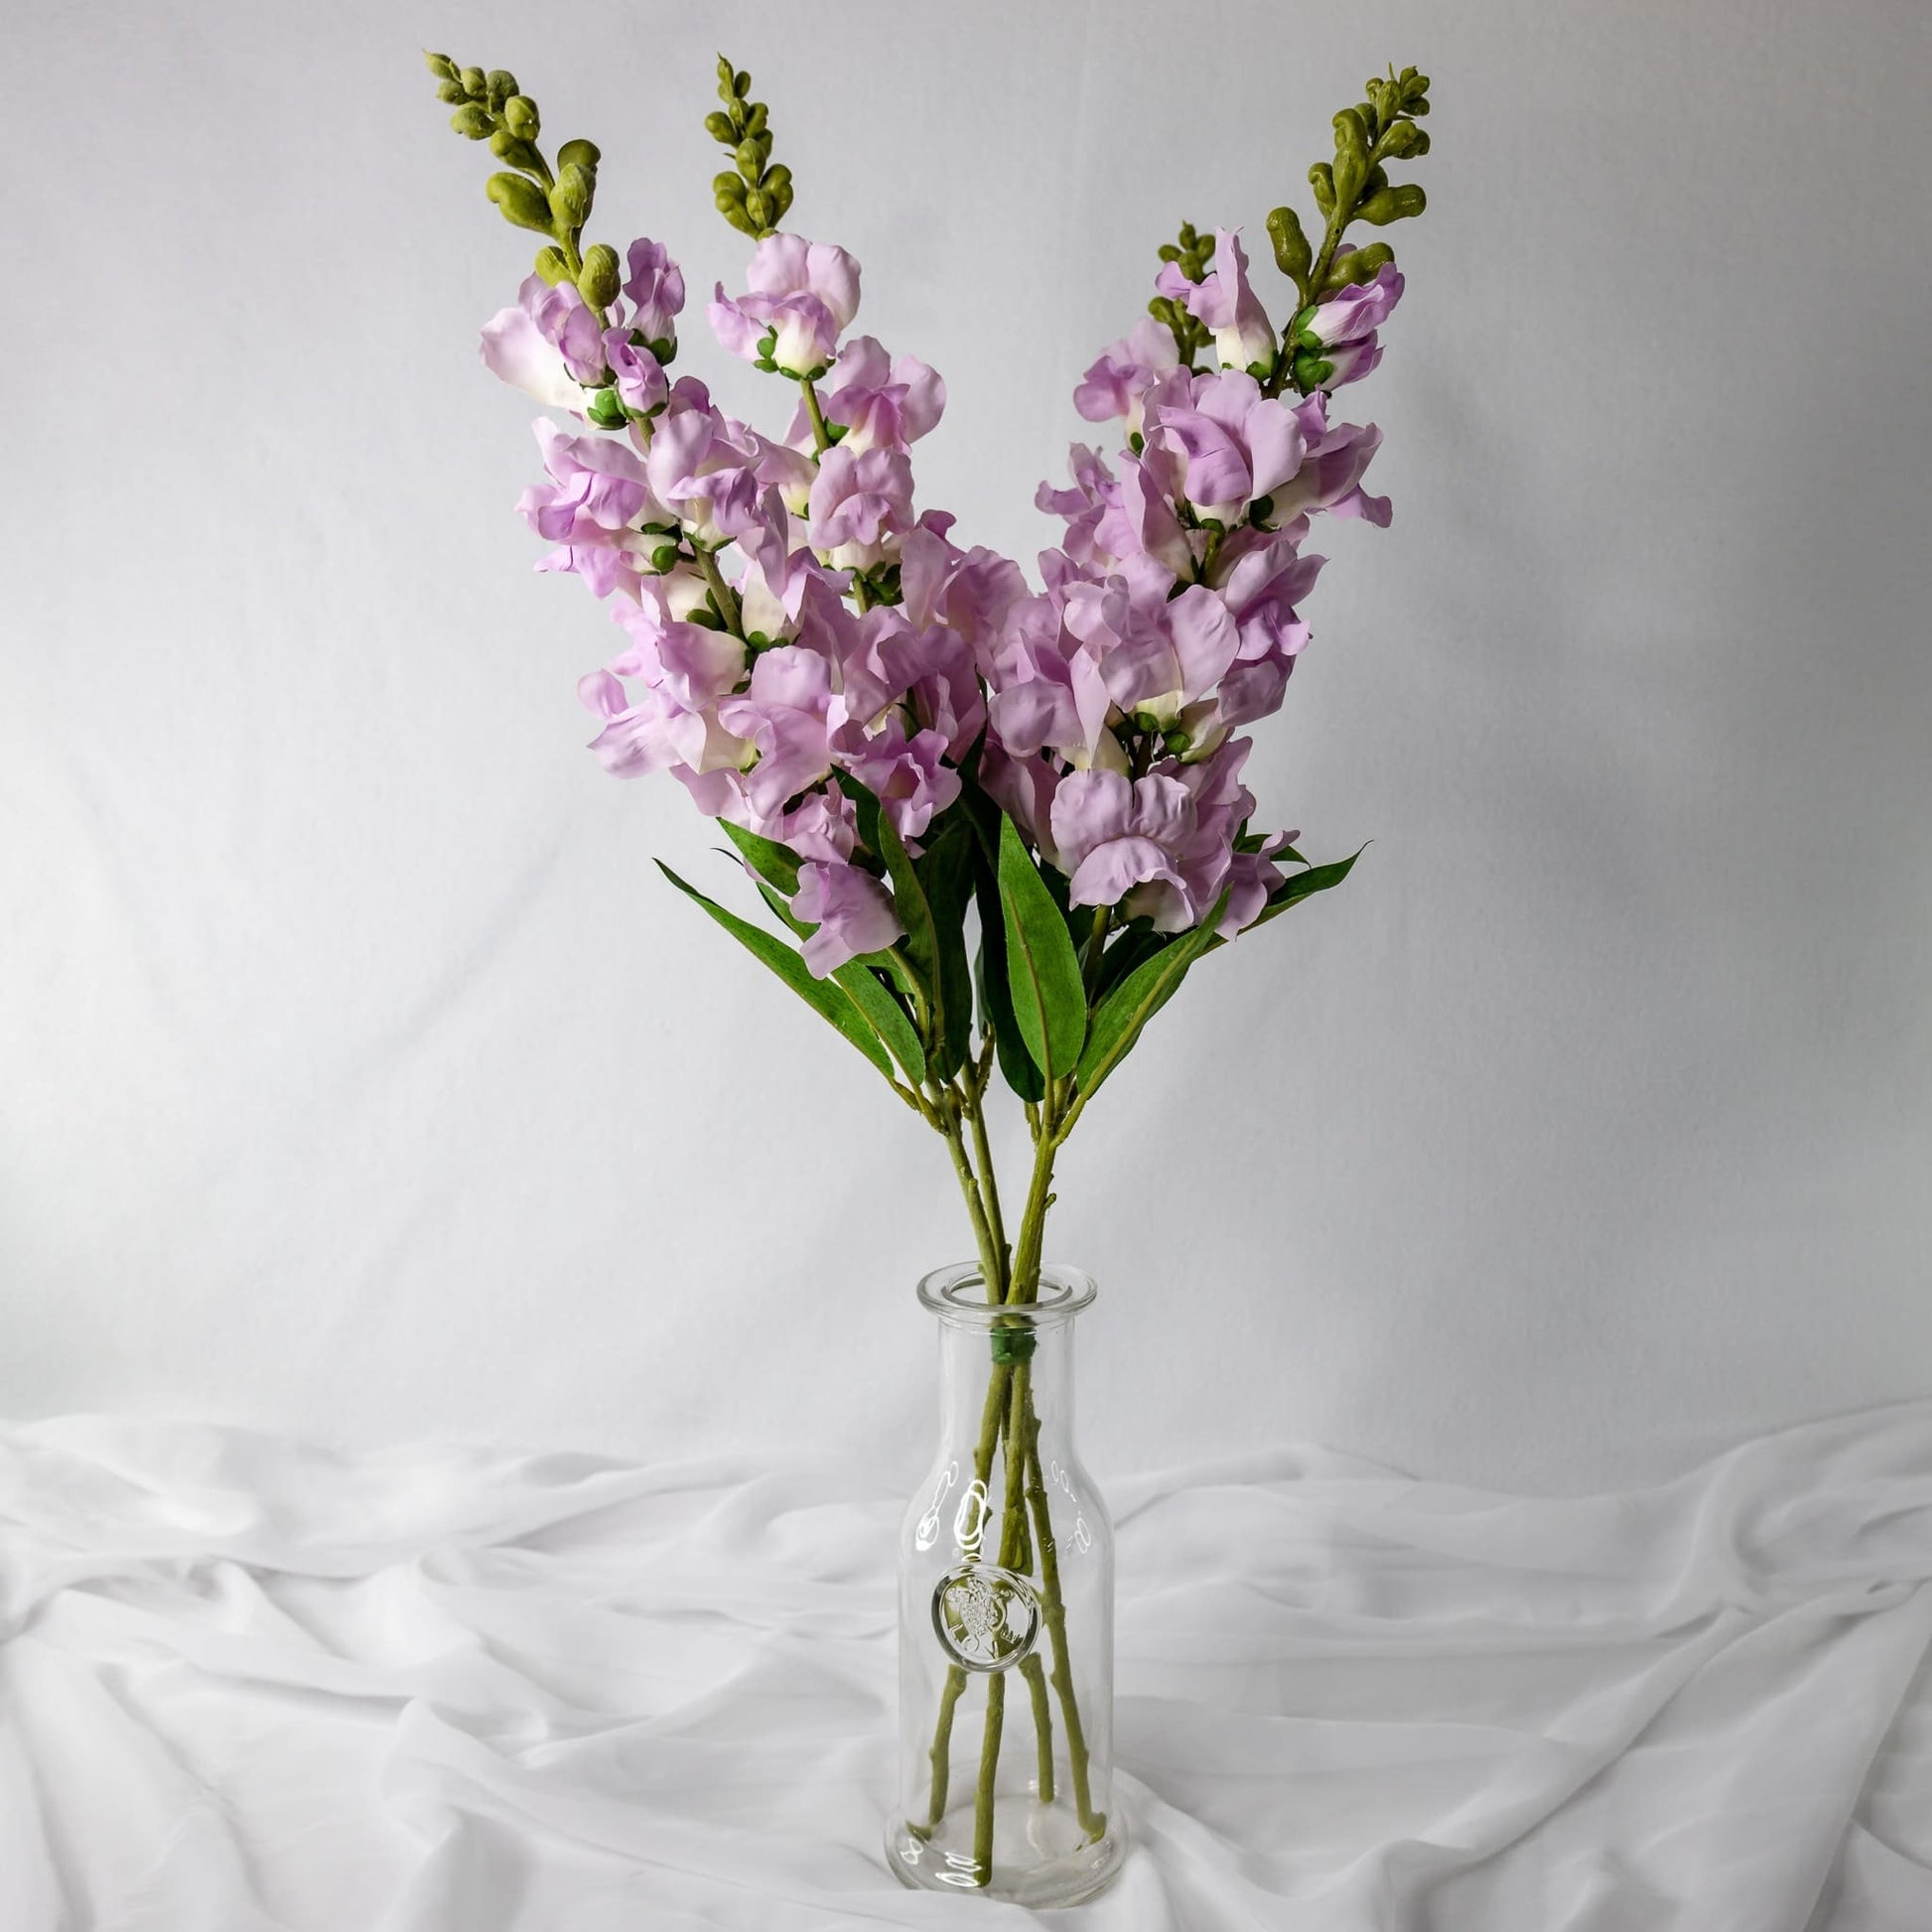 artificial Lavender Snap Dragons in clear transparent vase